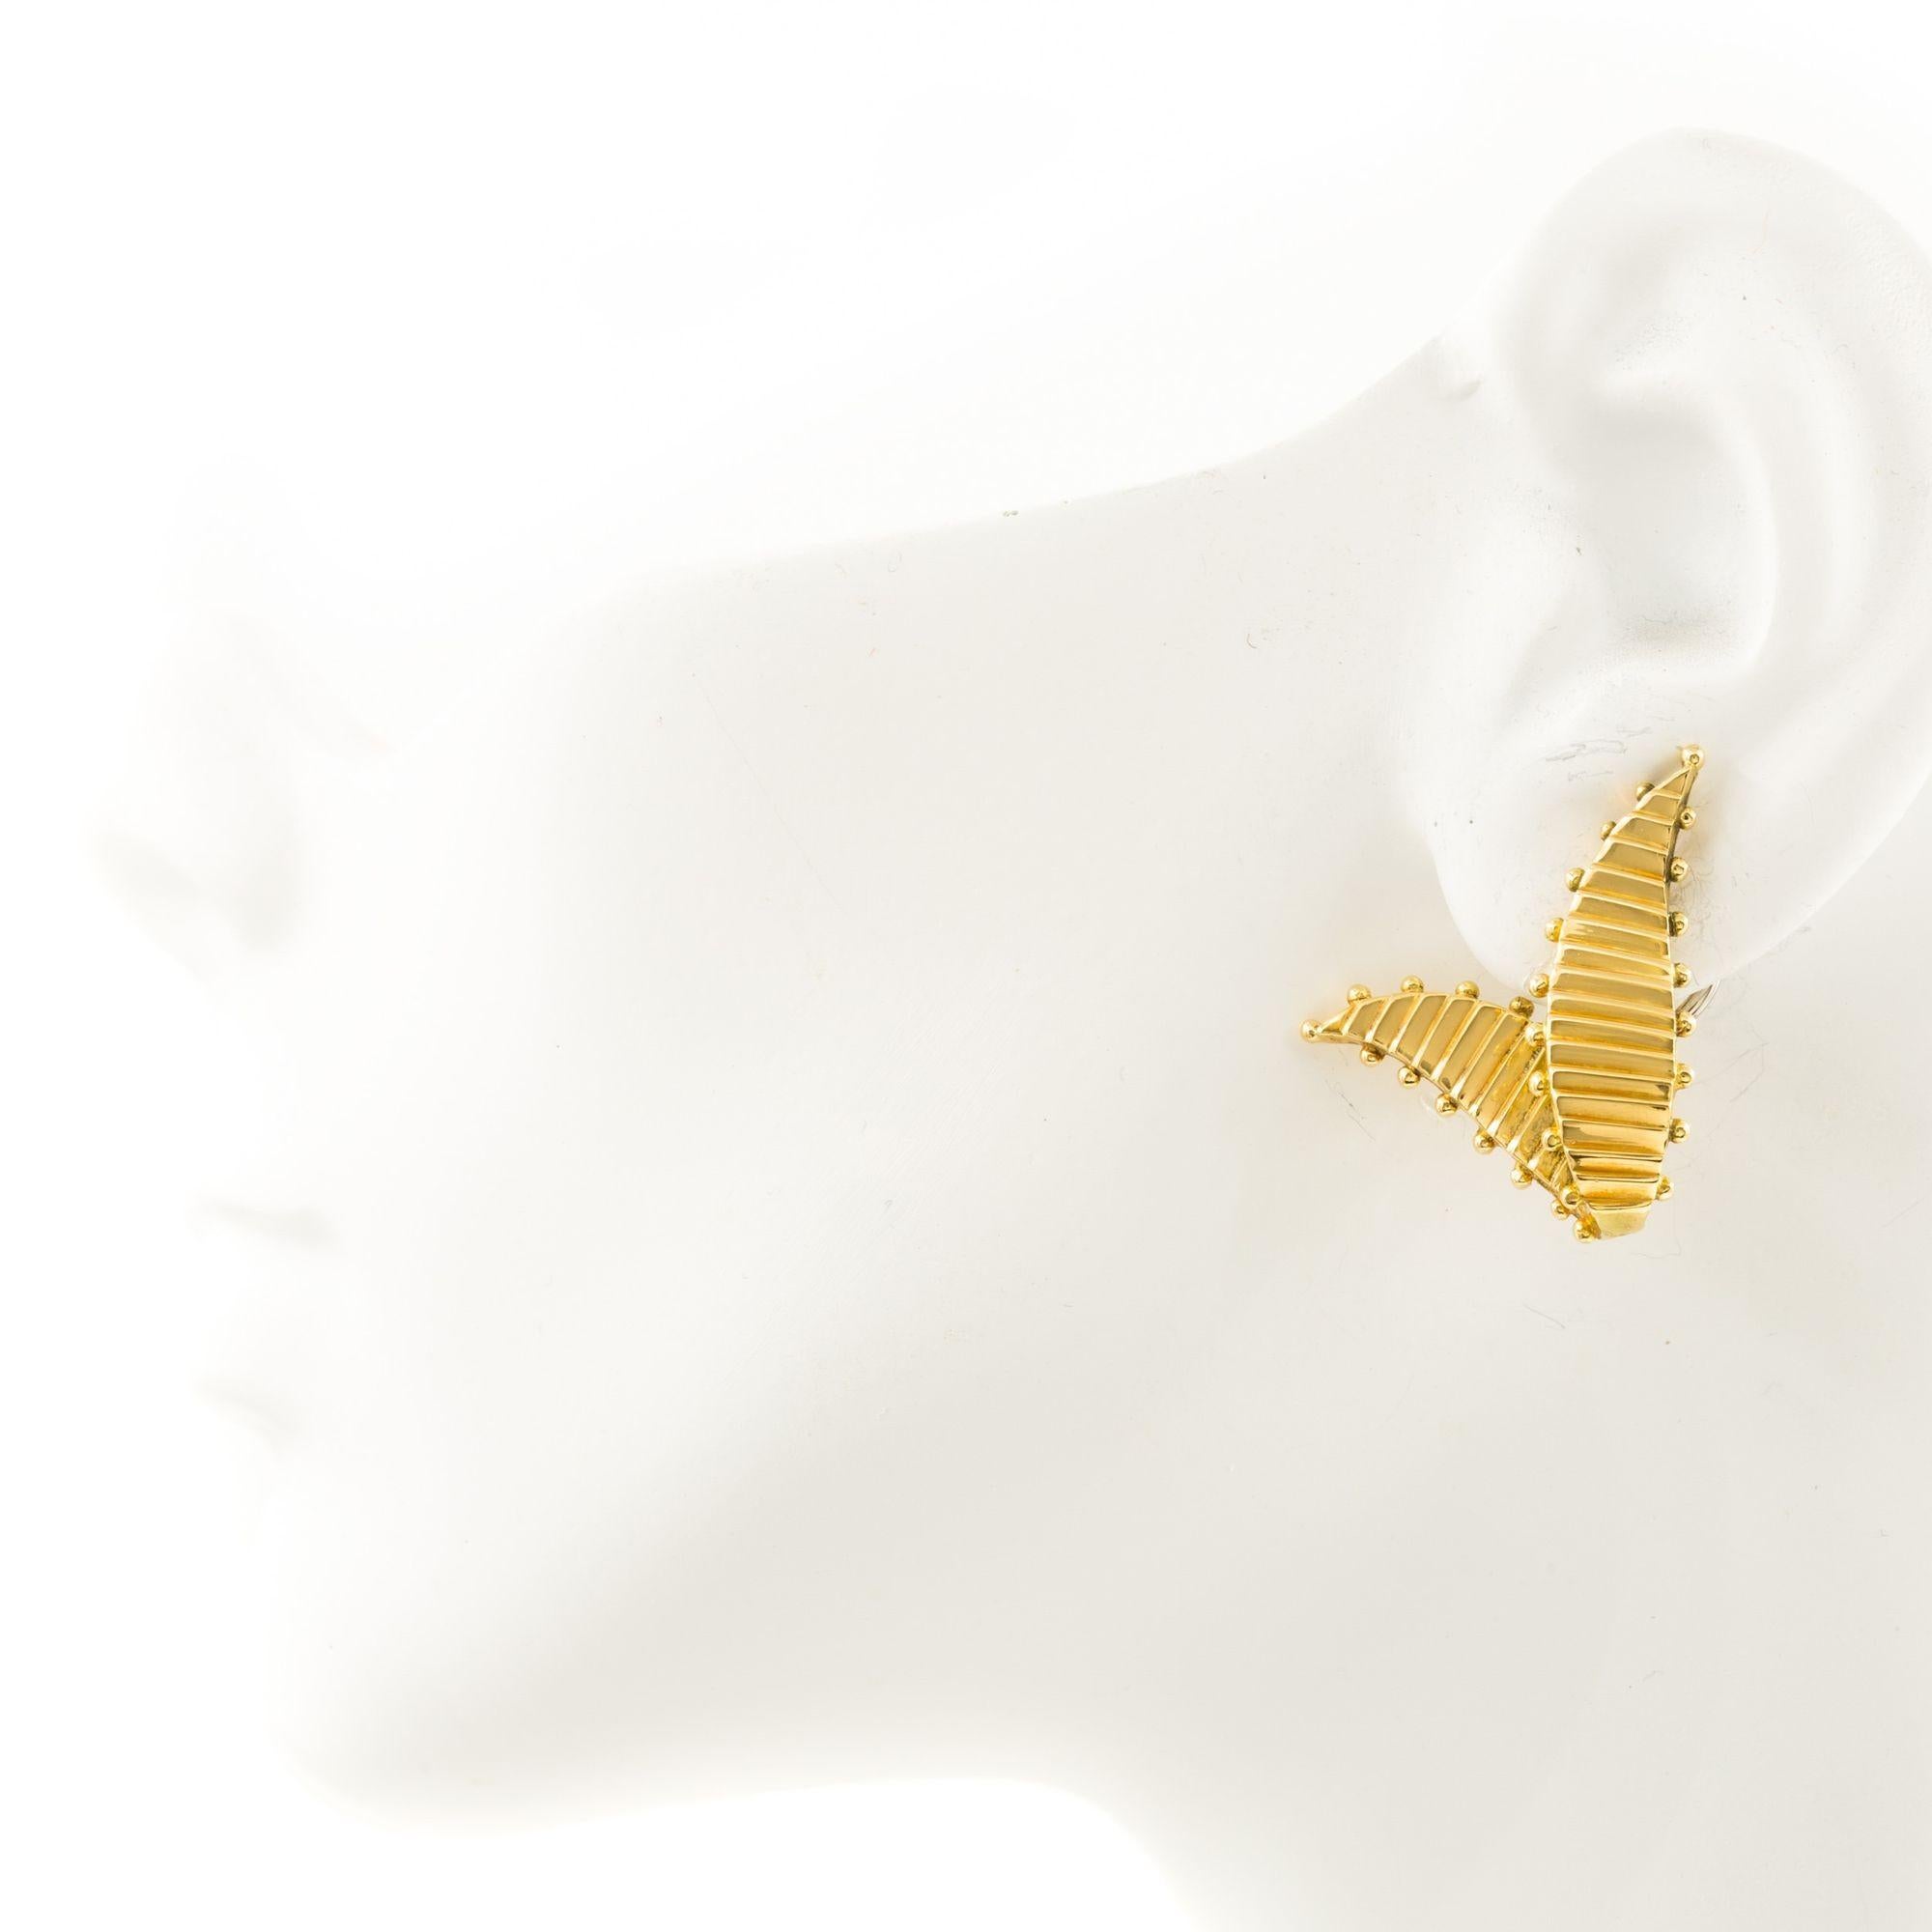 Pair of 18K Yellow Gold “V” Earrings
Item # C104607

A pair of 18K yellow gold earrings, designed in a 